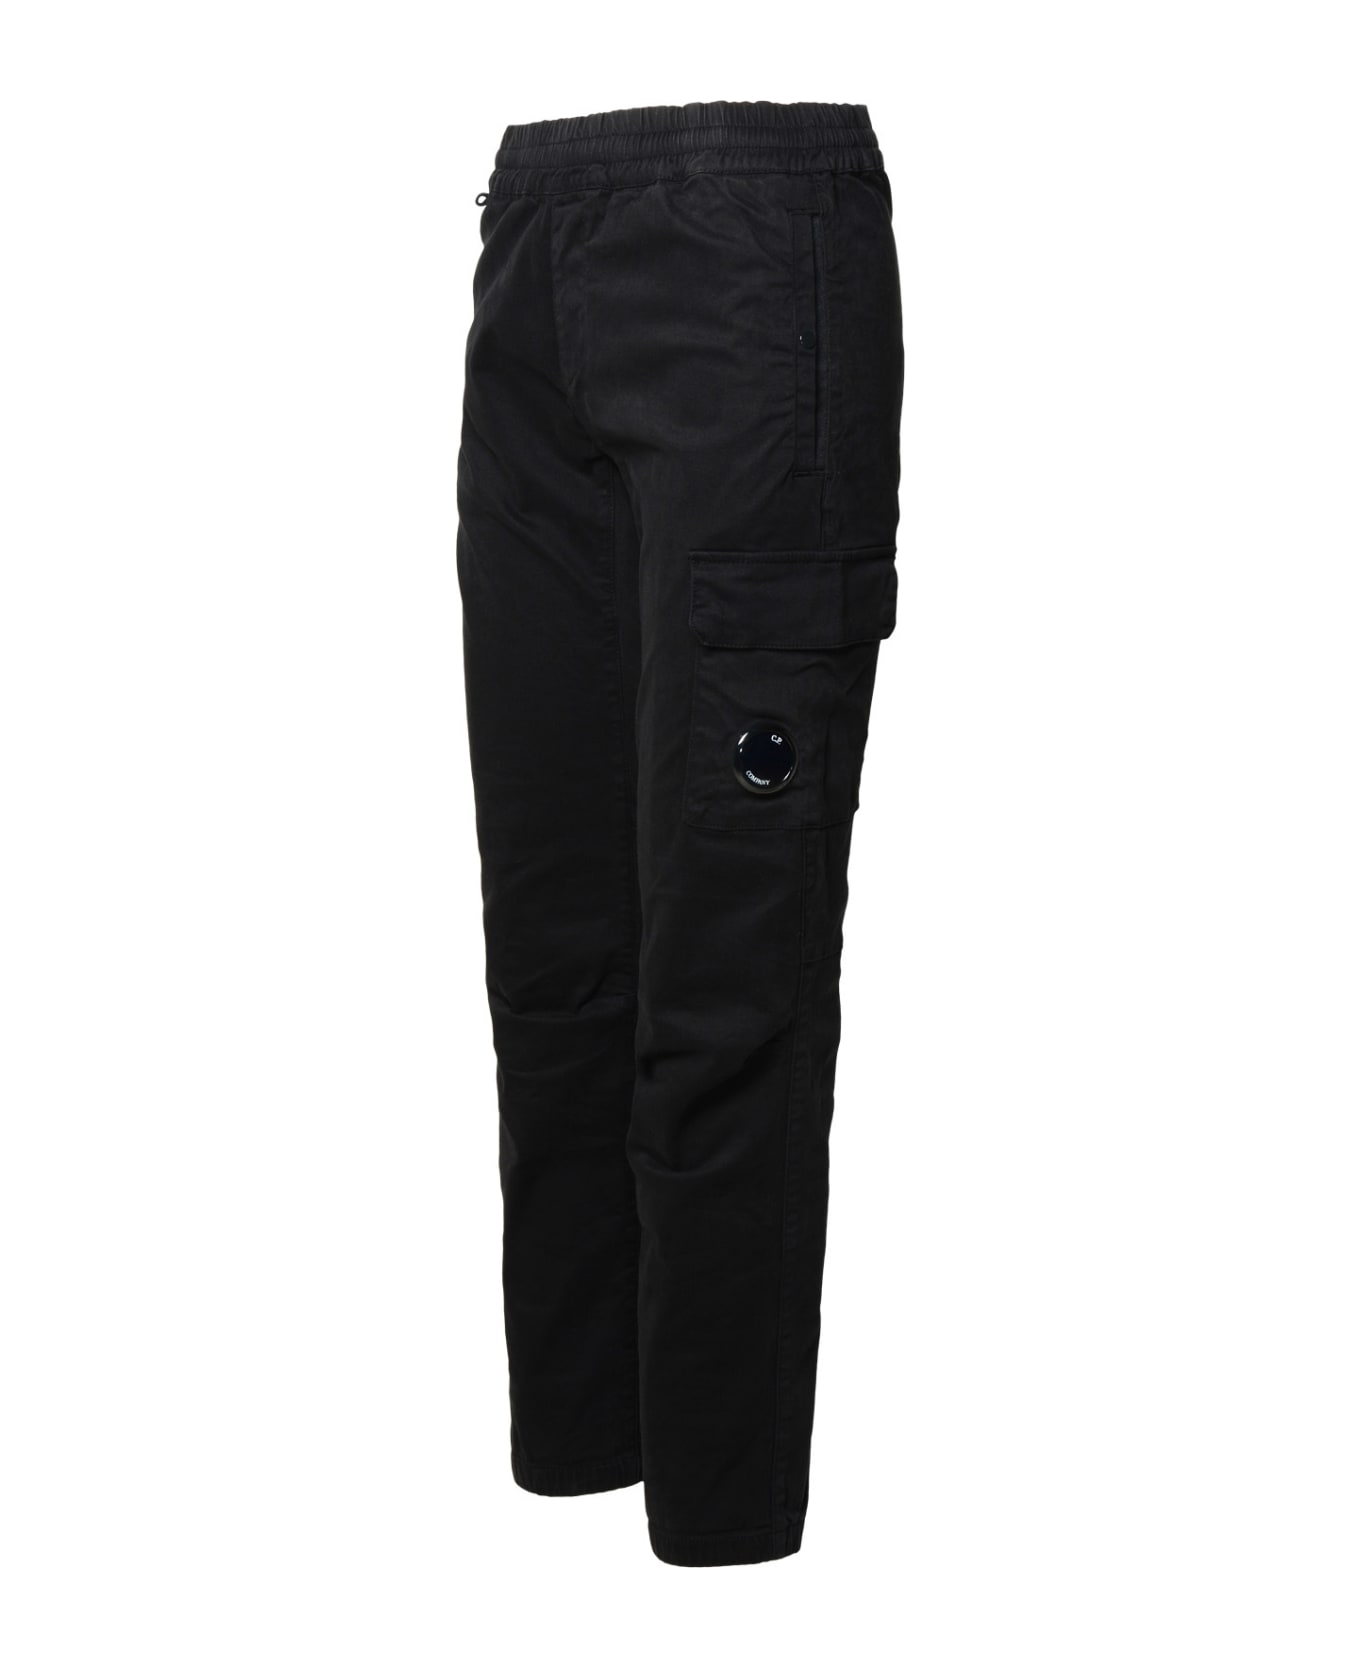 C.P. Company Black Cotton Trousers - Black